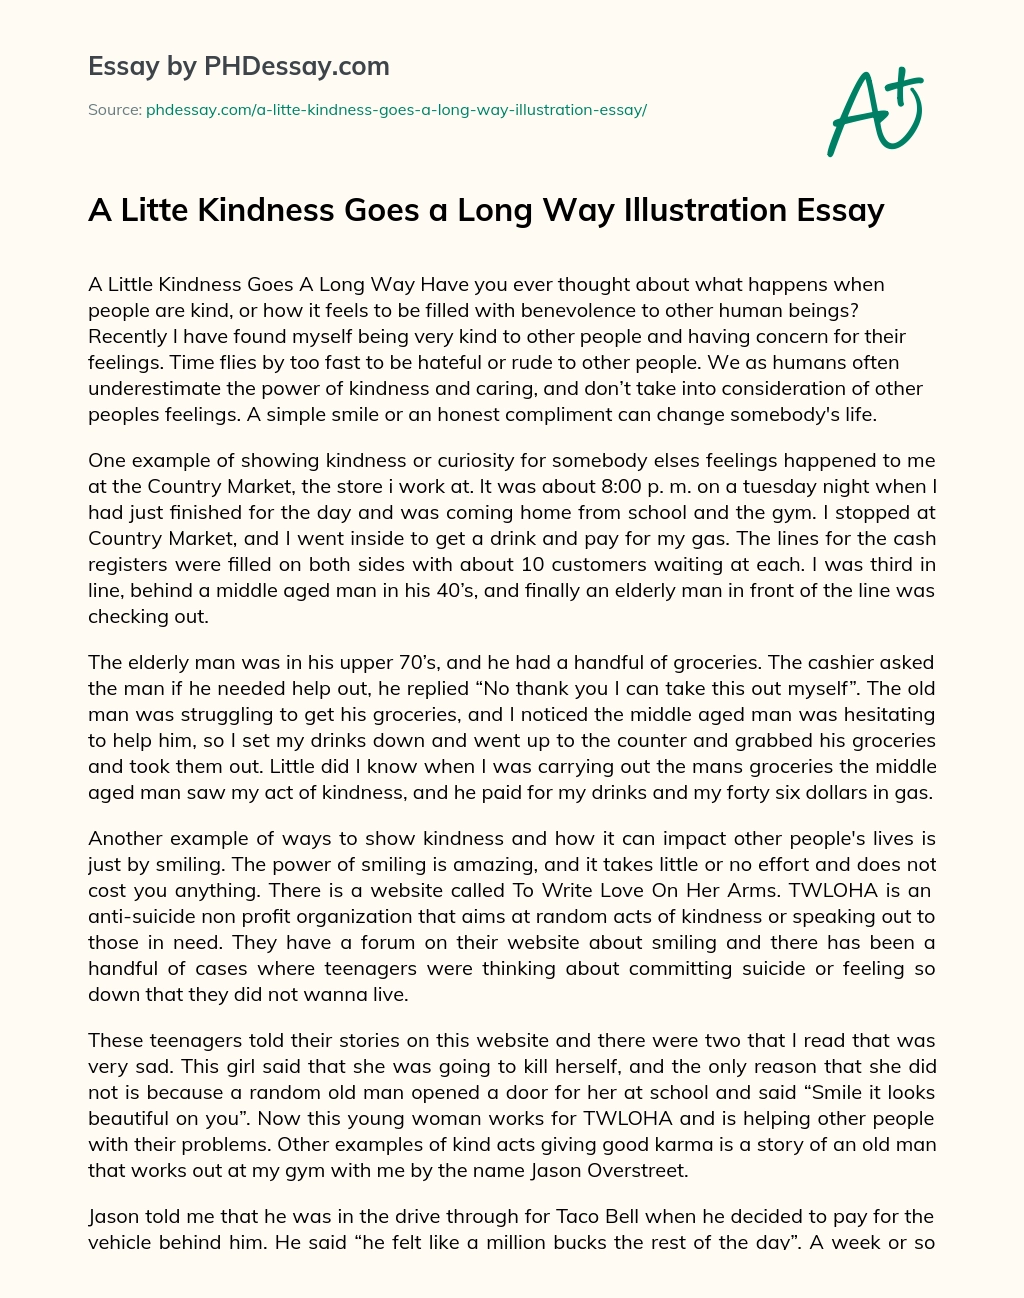 A Litte Kindness Goes a Long Way Illustration Essay essay